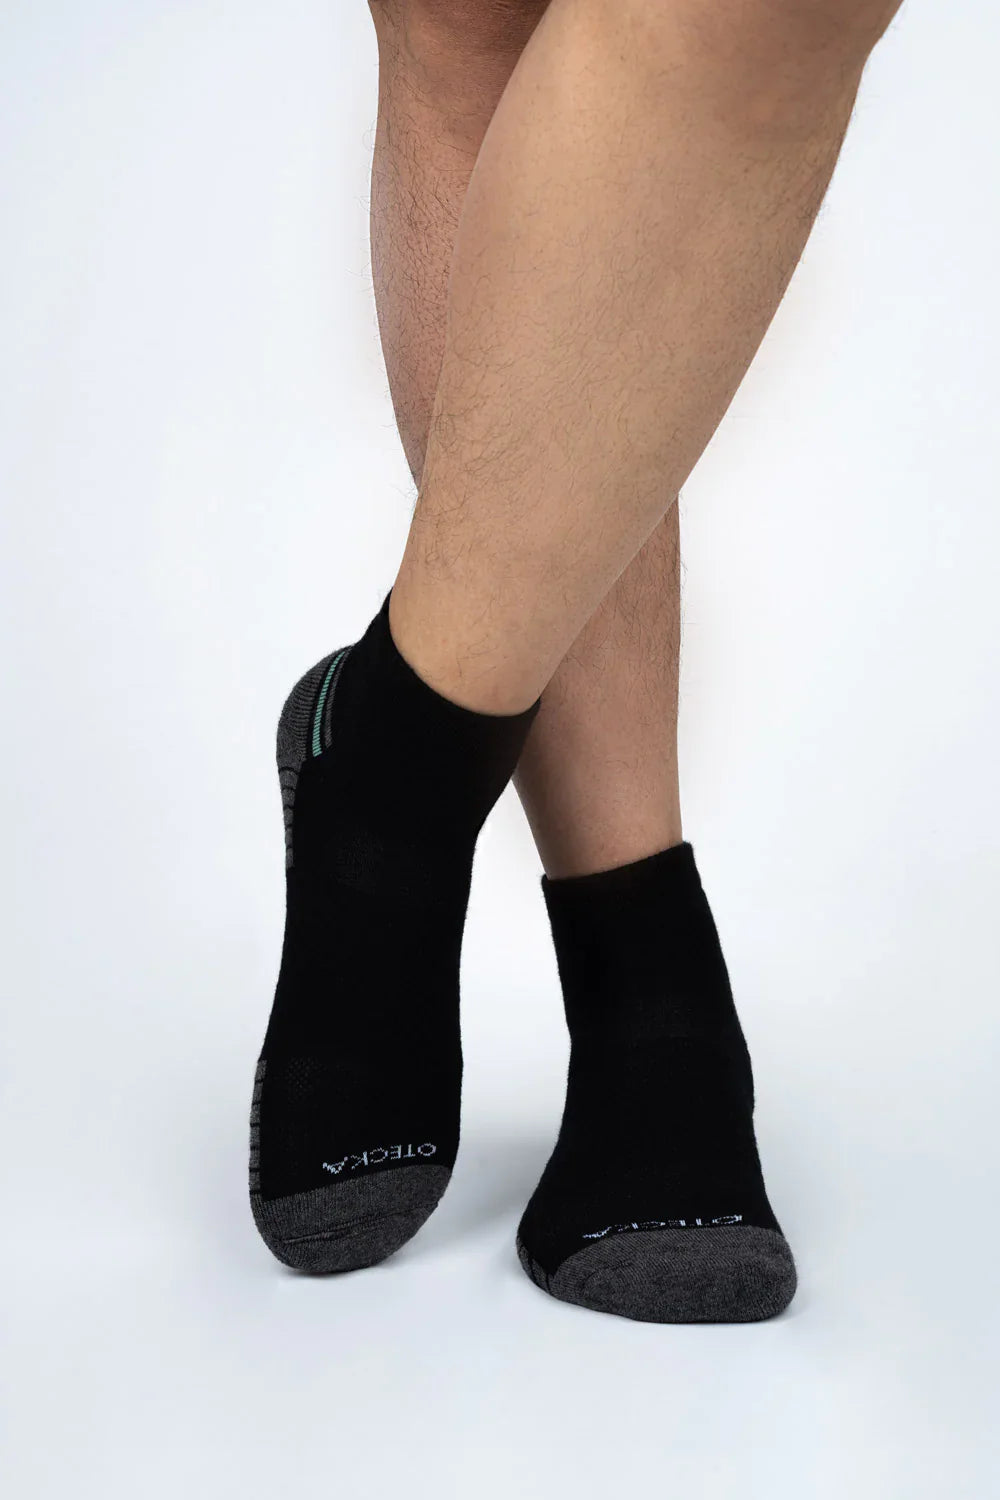 Performance Ankle Socks Pack of 4